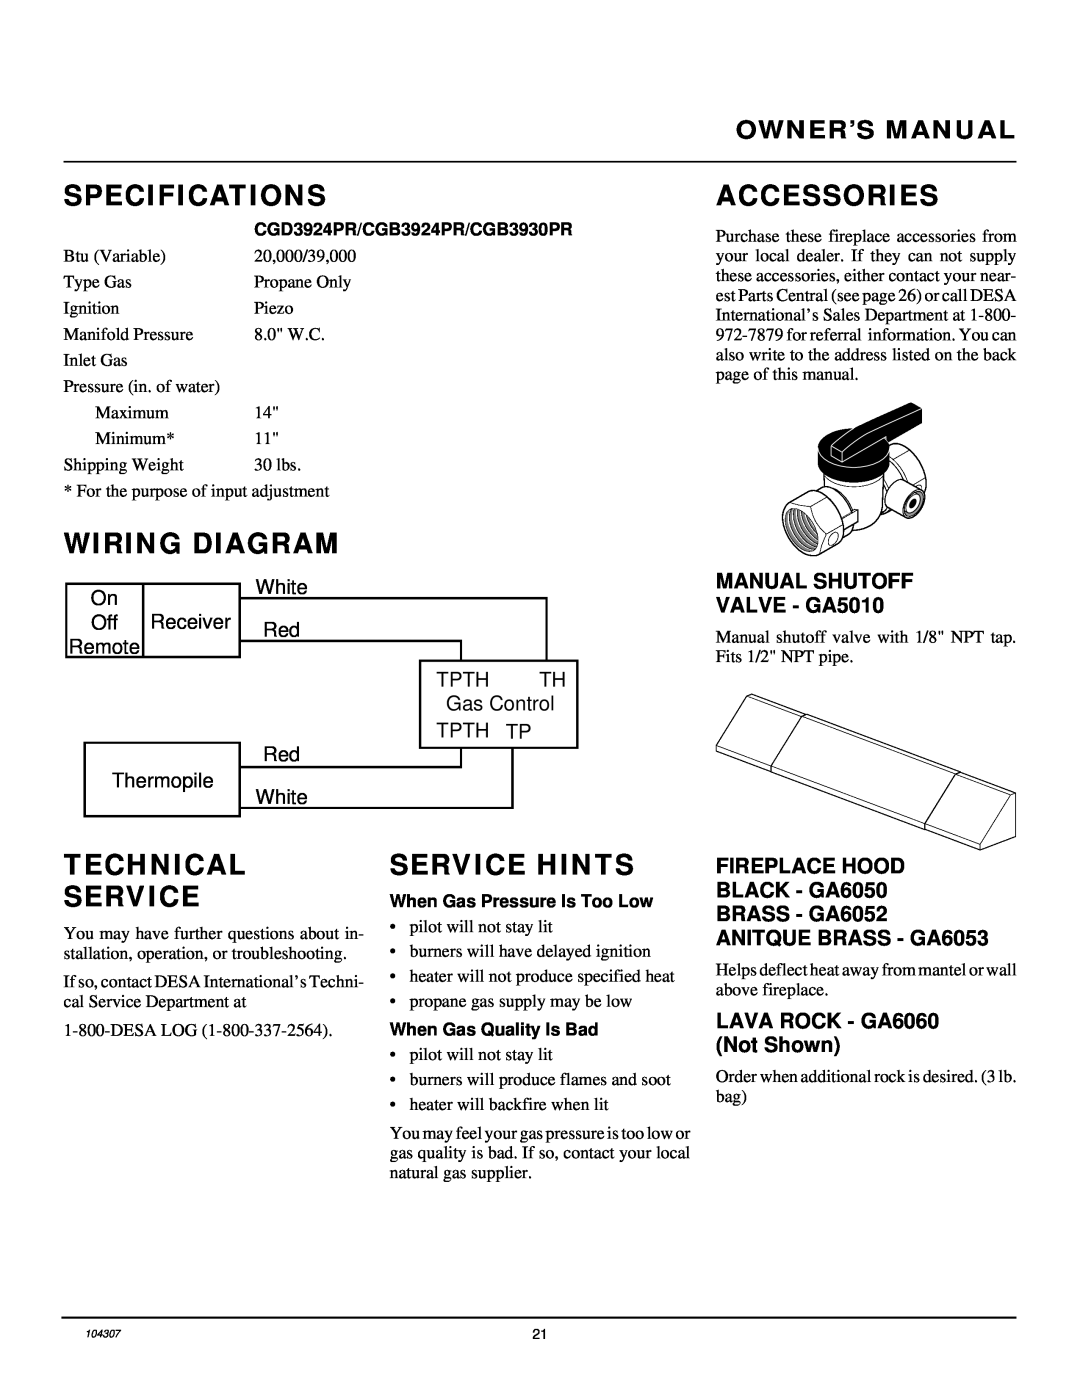 Desa CGD3924PR Specifications, Wiring Diagram, Accessories, Technical Service, Service Hints, LAVA ROCK - GA6060 Not Shown 